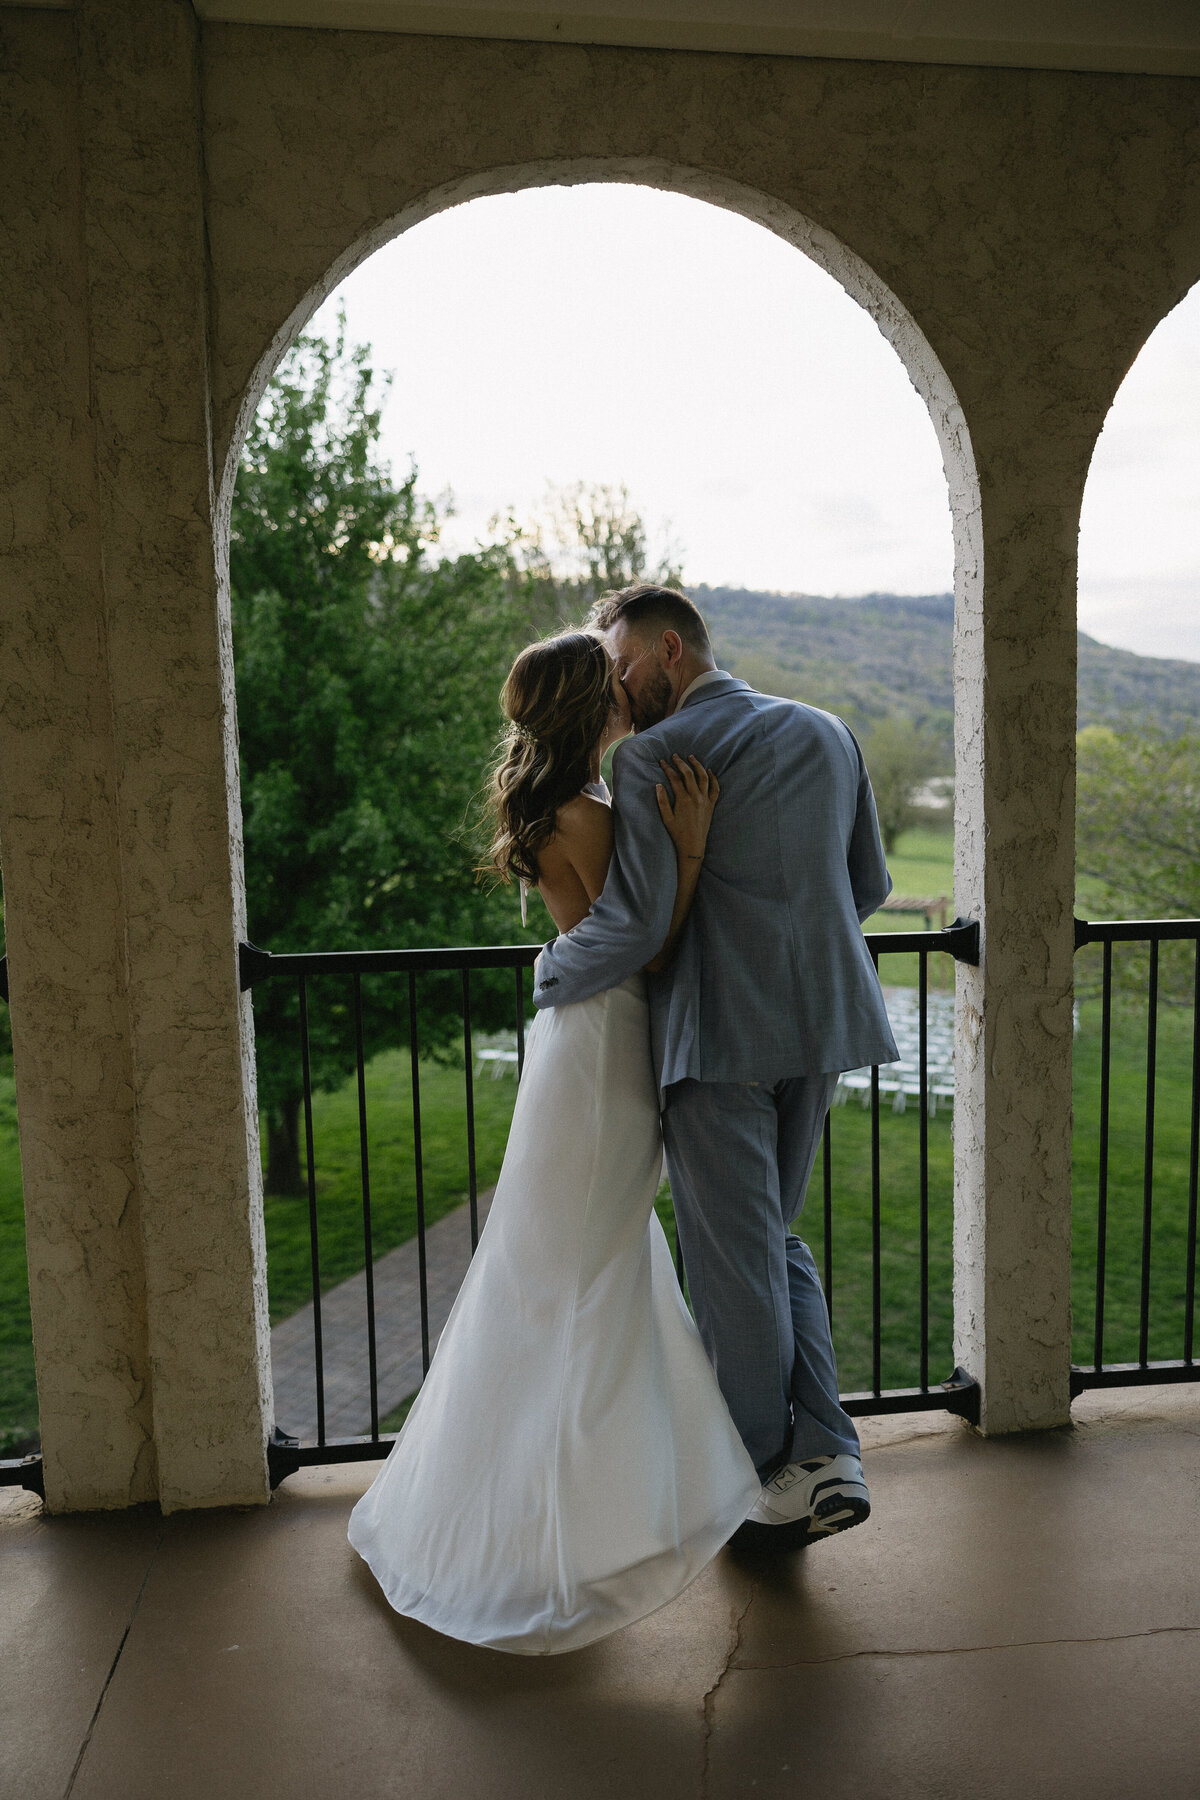 Tennessee Wedding Photographer and Video | Dana Photo Co.